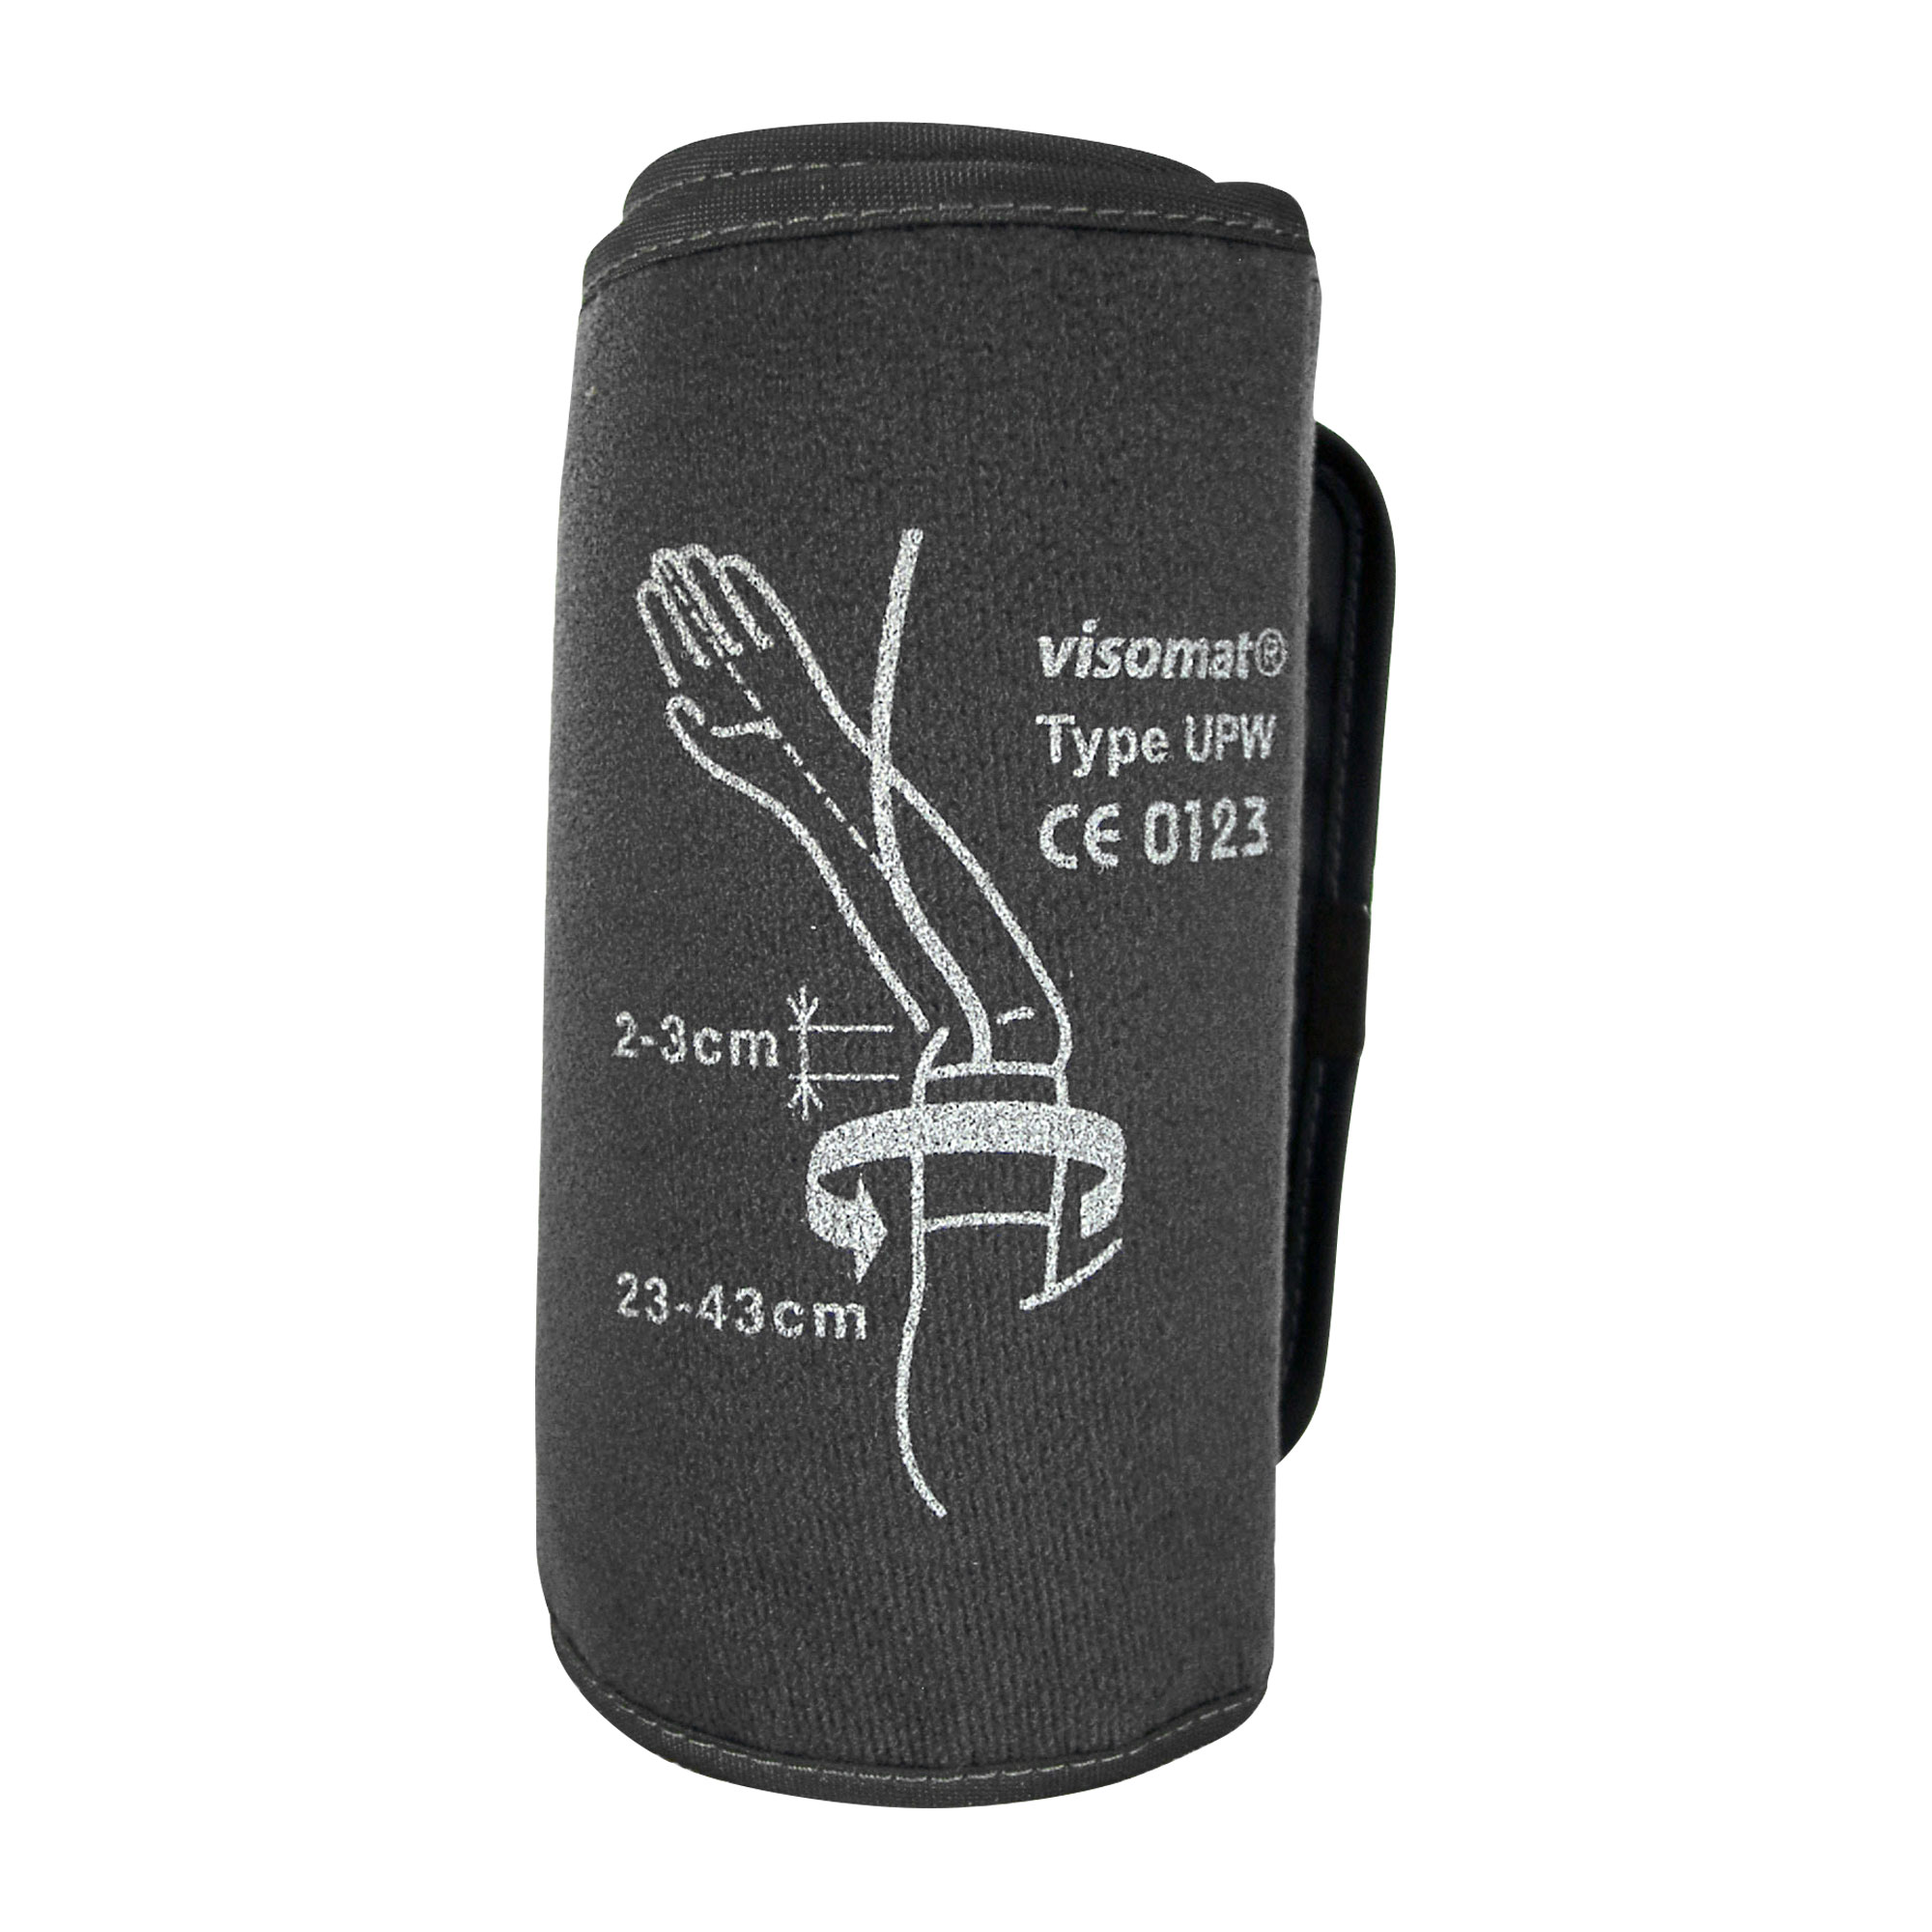 Passend für Oberarmblutdruckmessgeräte Visomat comfort form und comfort III/3.